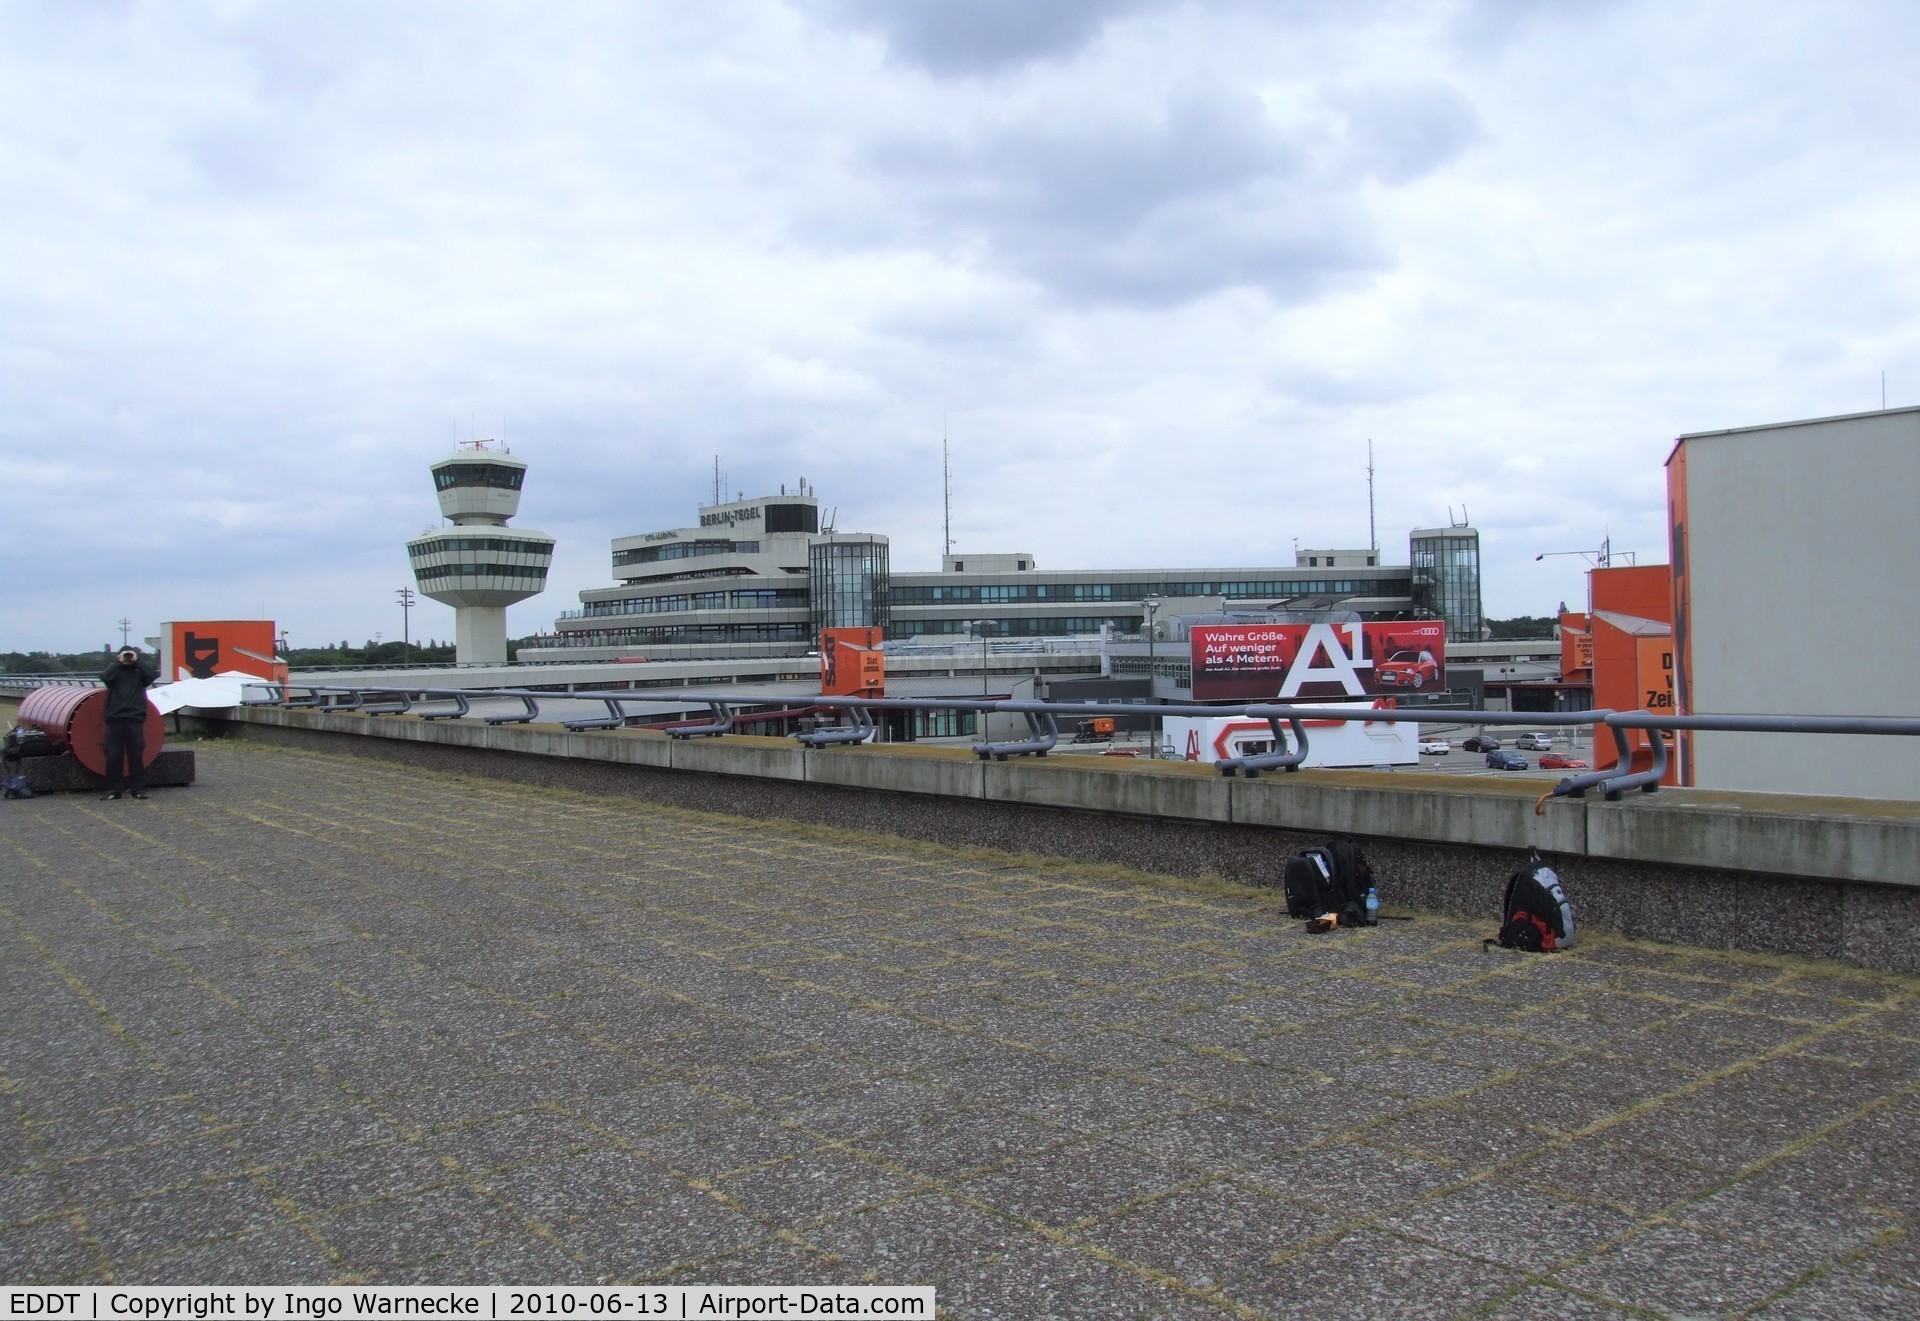 Tegel International Airport (closing in 2011), Berlin Germany (EDDT) - visitors terrace at the hexagonal main terminal at Berlin Tegel airport